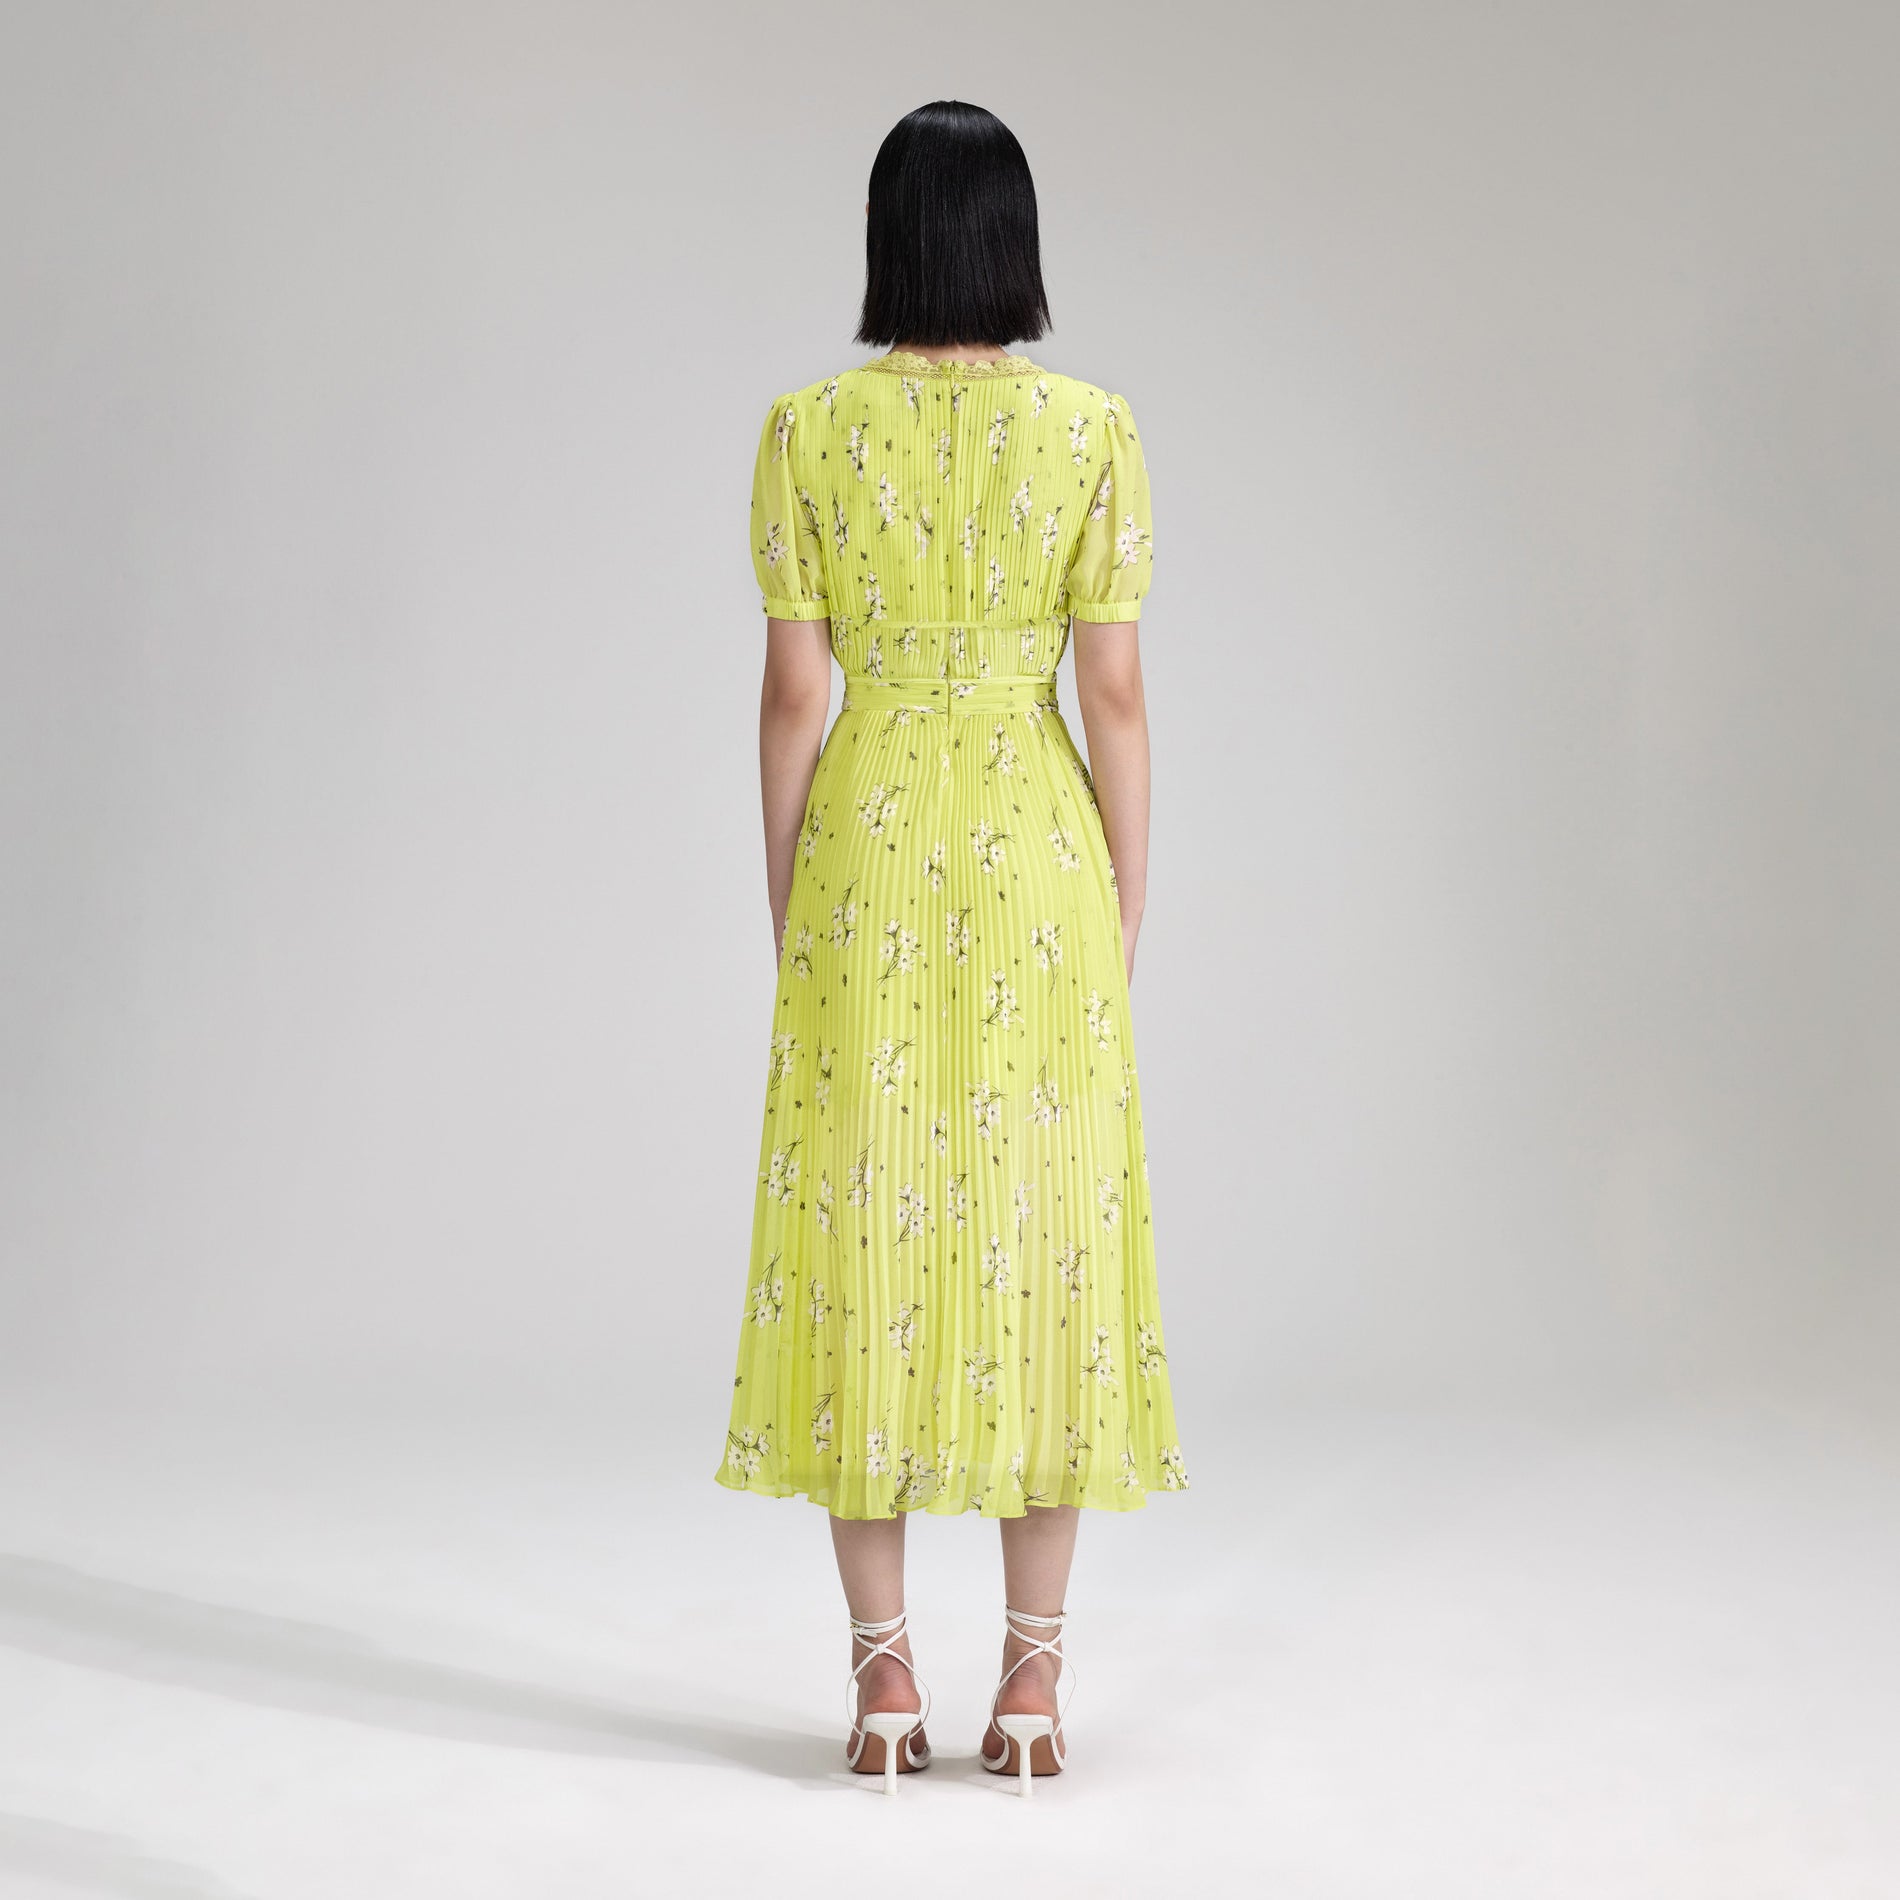 A woman wearing the Lime Floral Chiffon Midi Dress